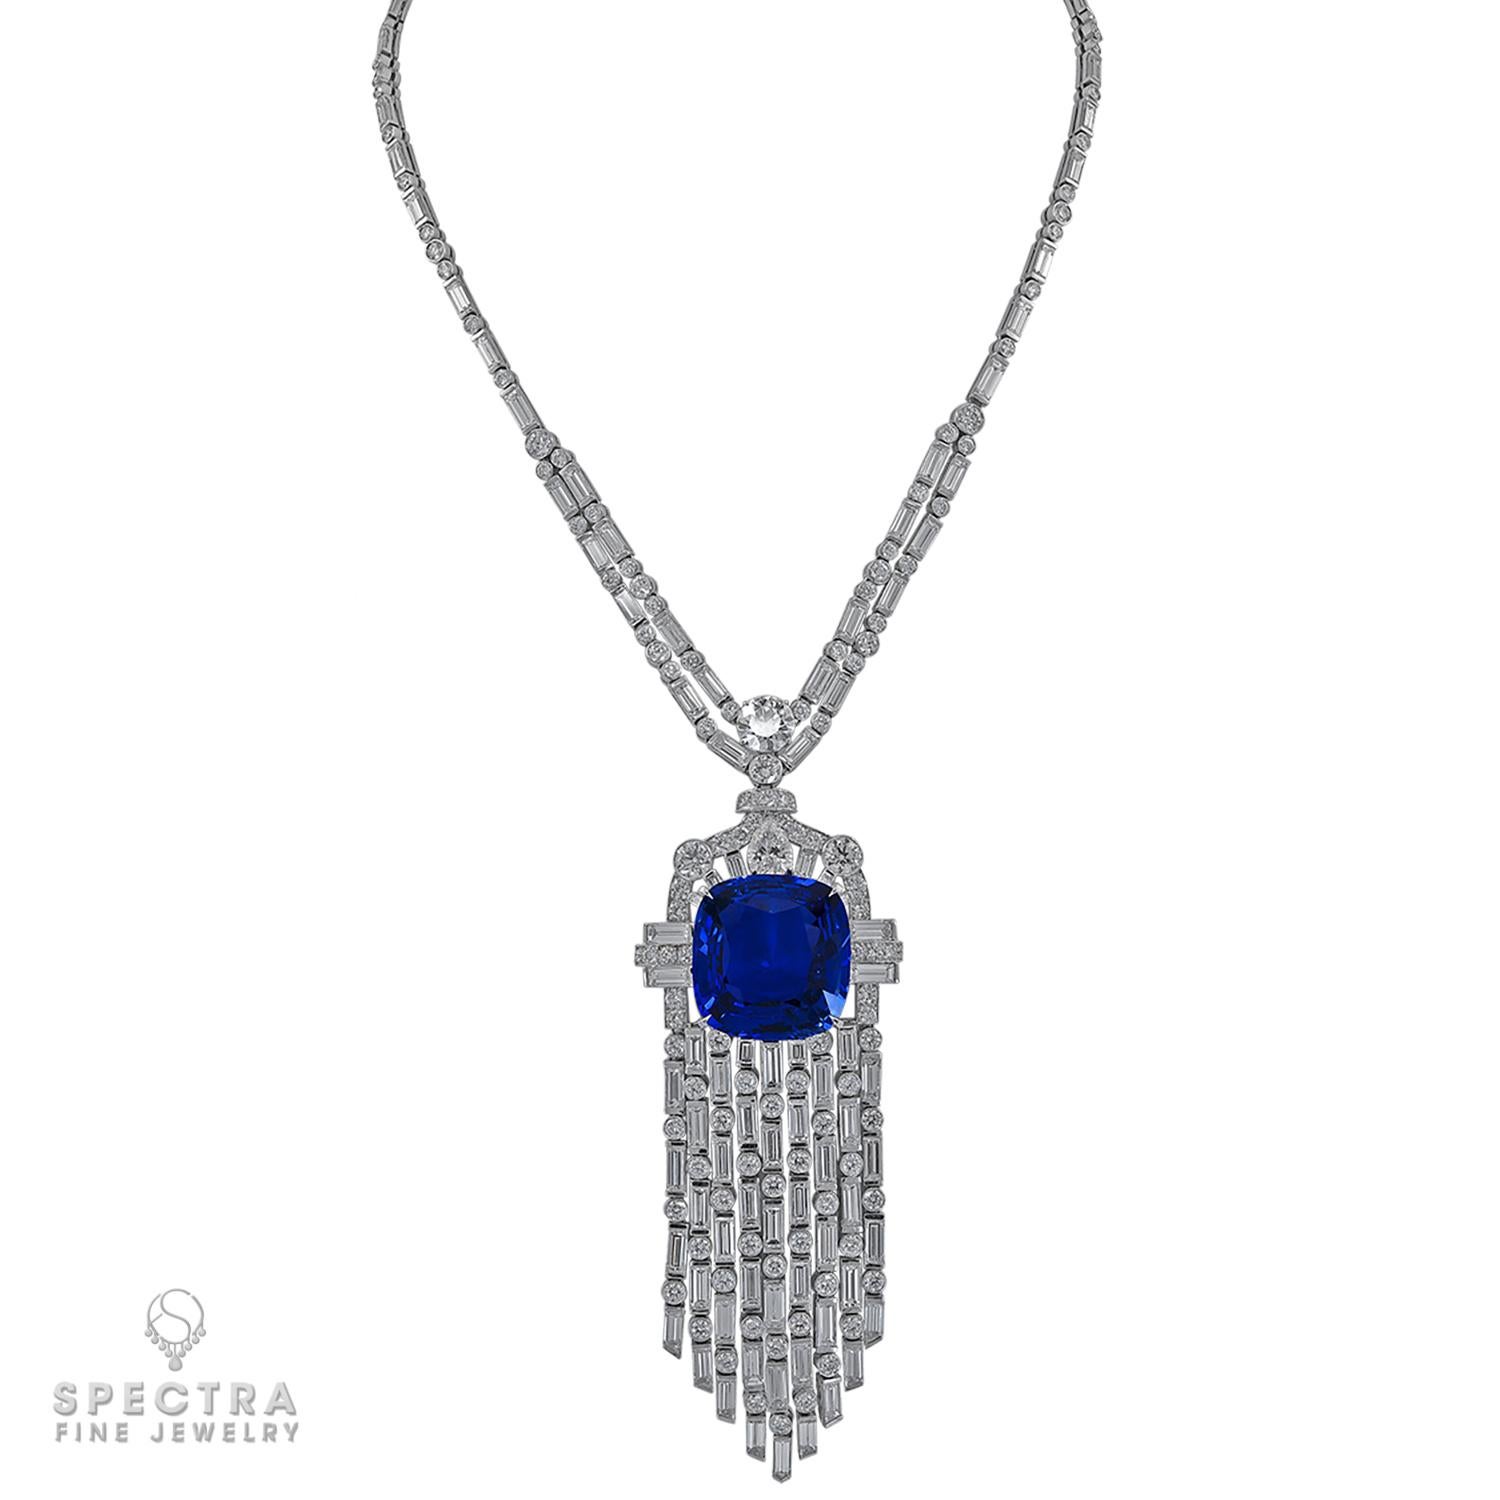 Contemporary Spectra Fine Jewelry 38.60 Carat Ceylon Sapphire Diamond Platinum Necklace For Sale